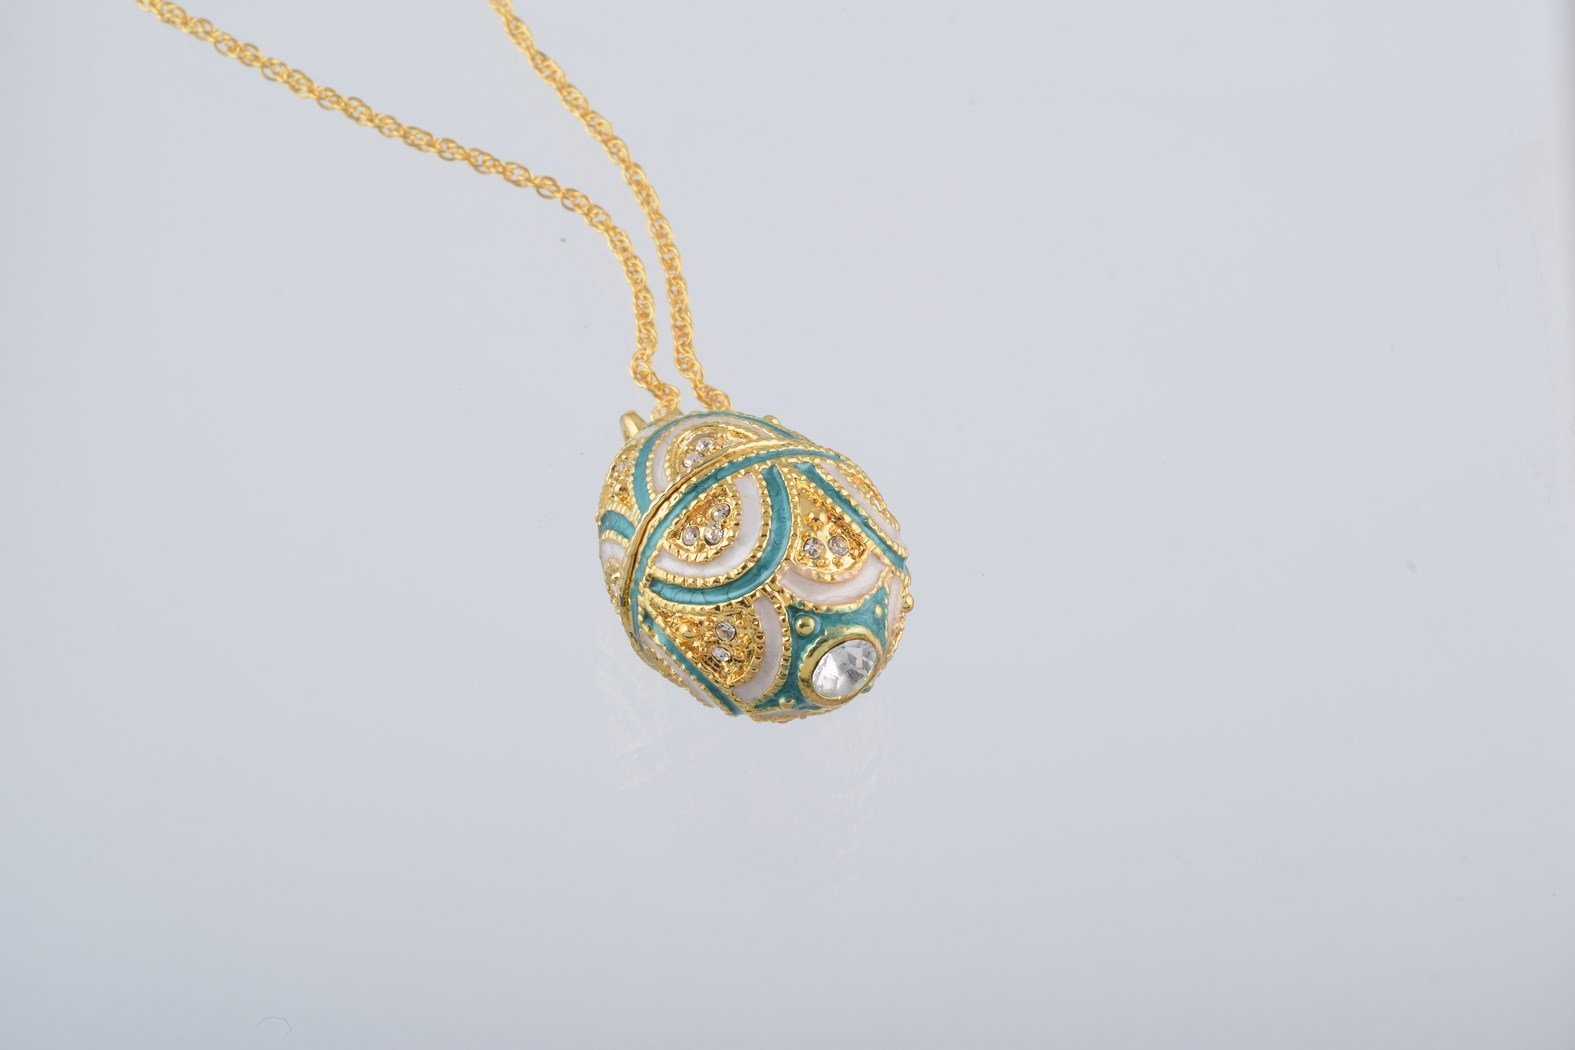 Keren Kopal Gold & Light Blue Egg Pendant Necklace  39.00